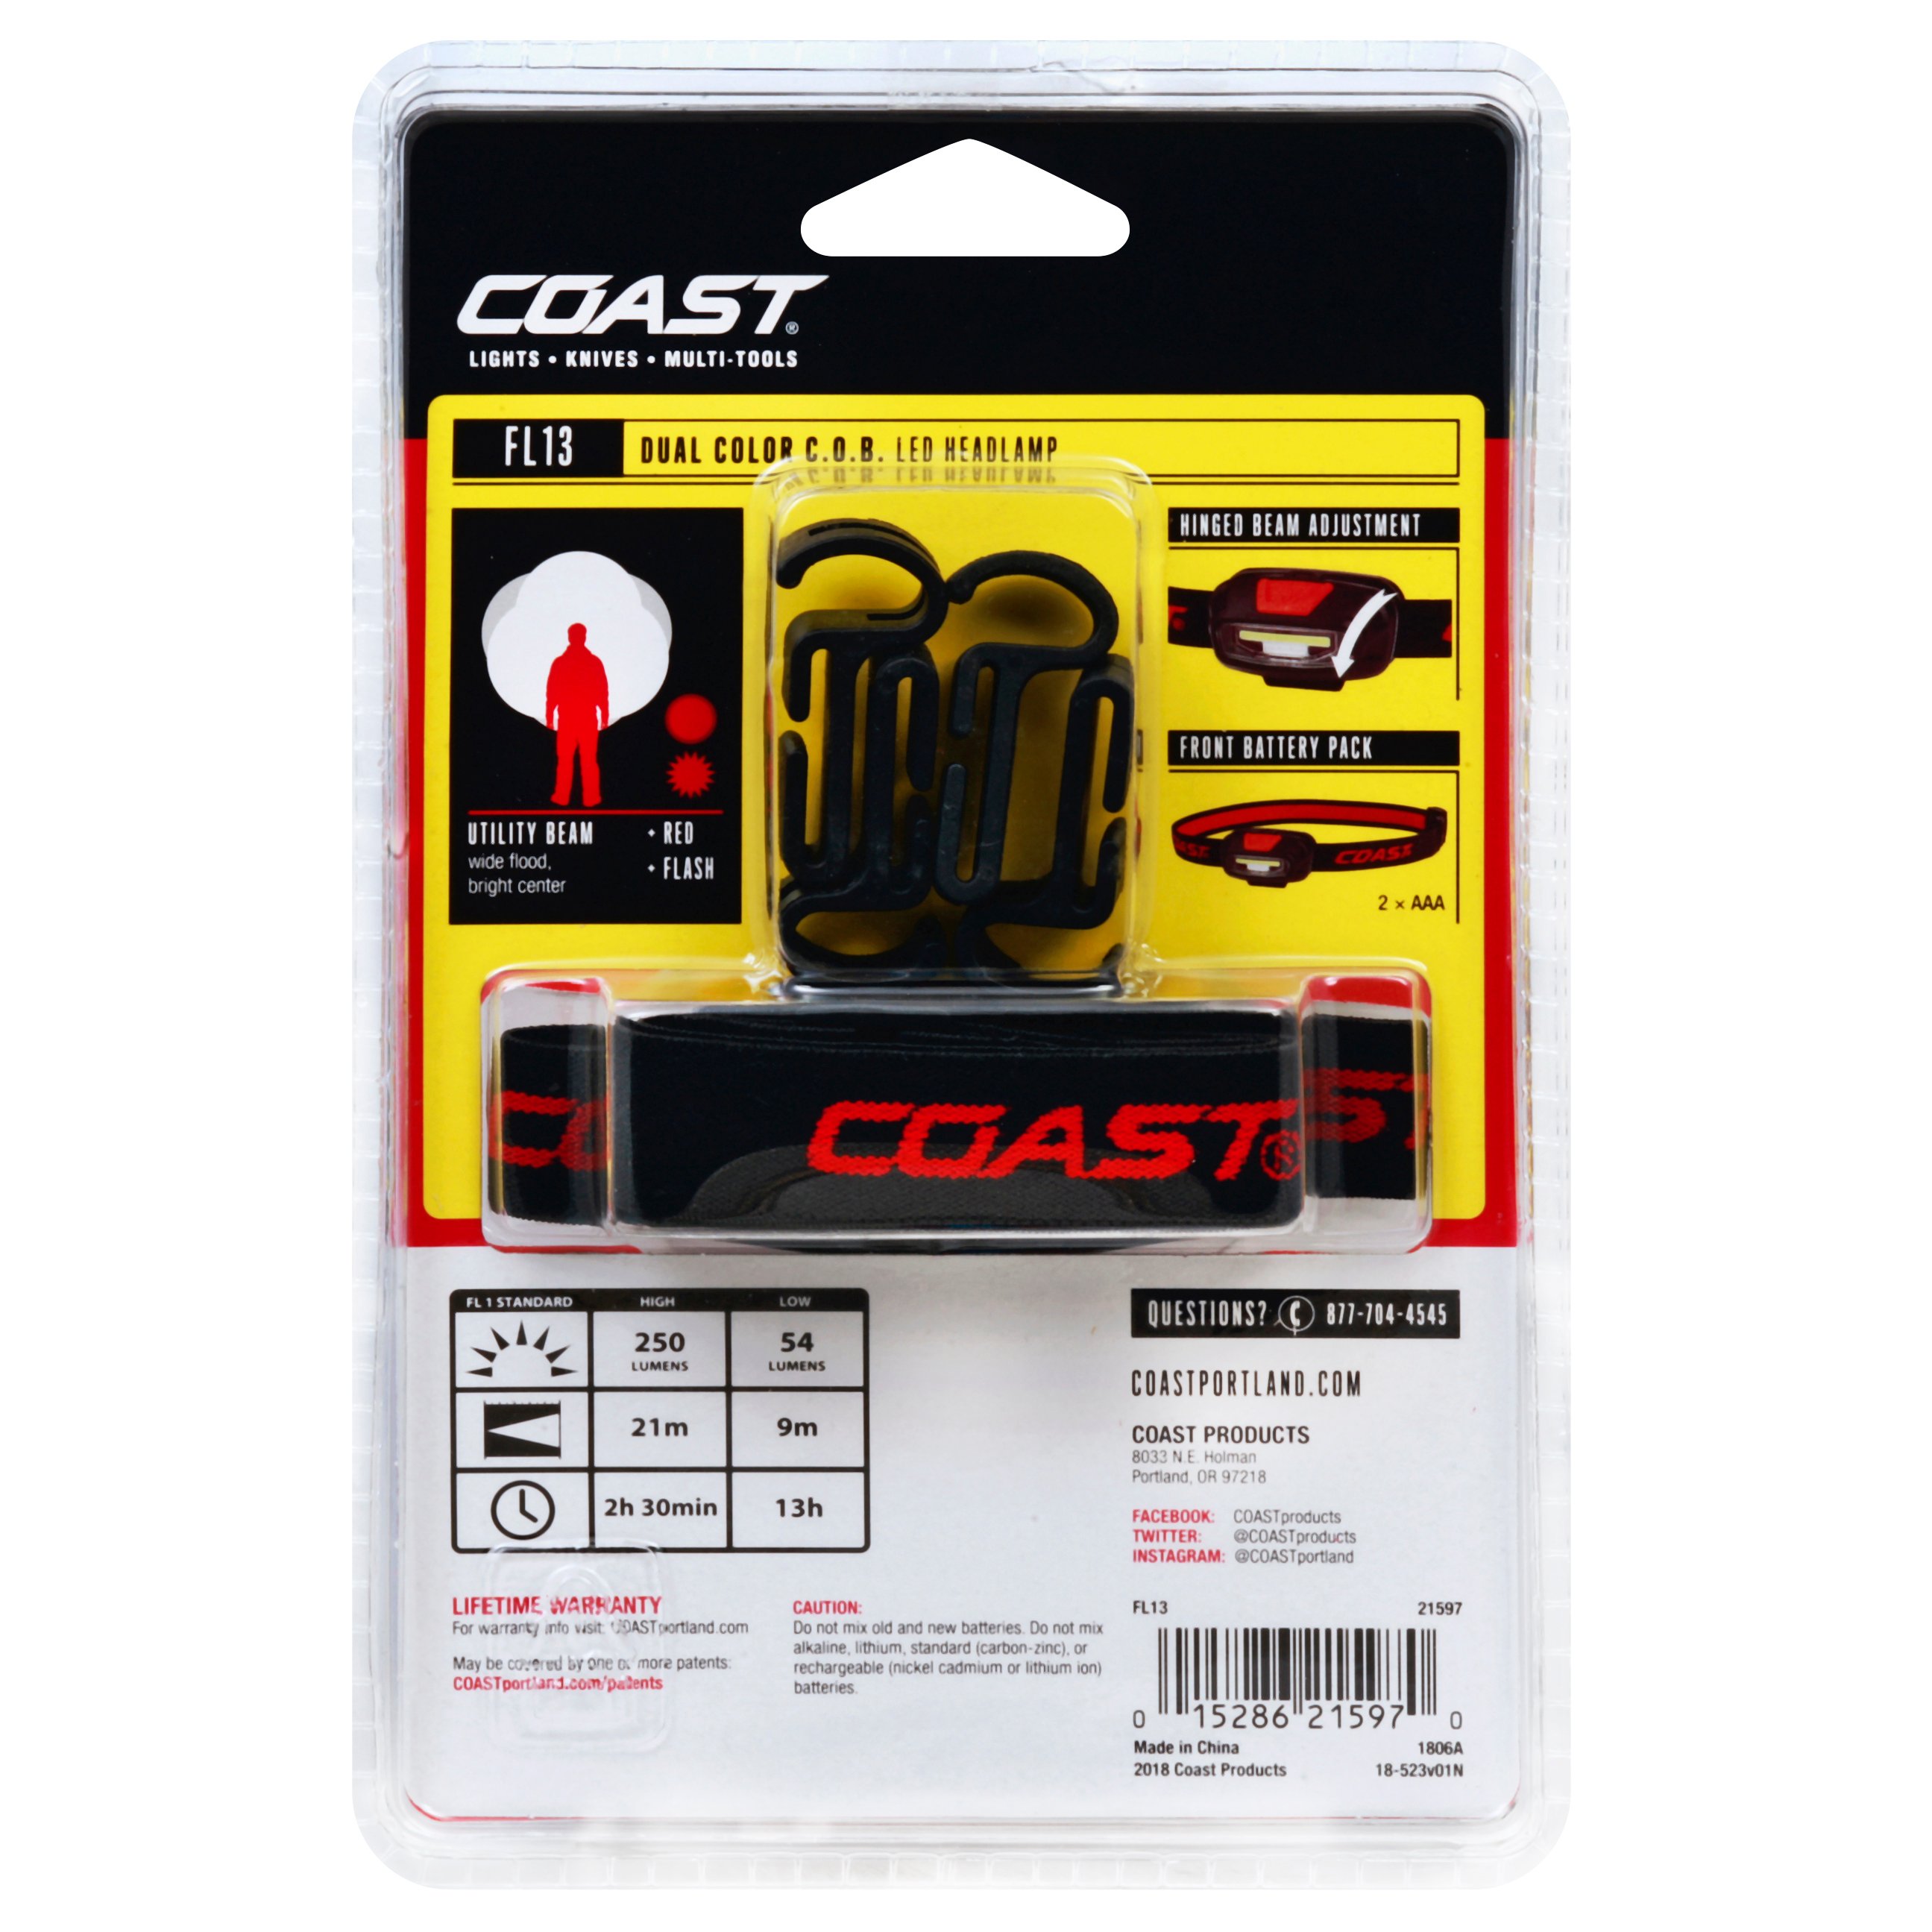 Coast Dual Color Utility Headlight Shop Flashlights at H-E-B